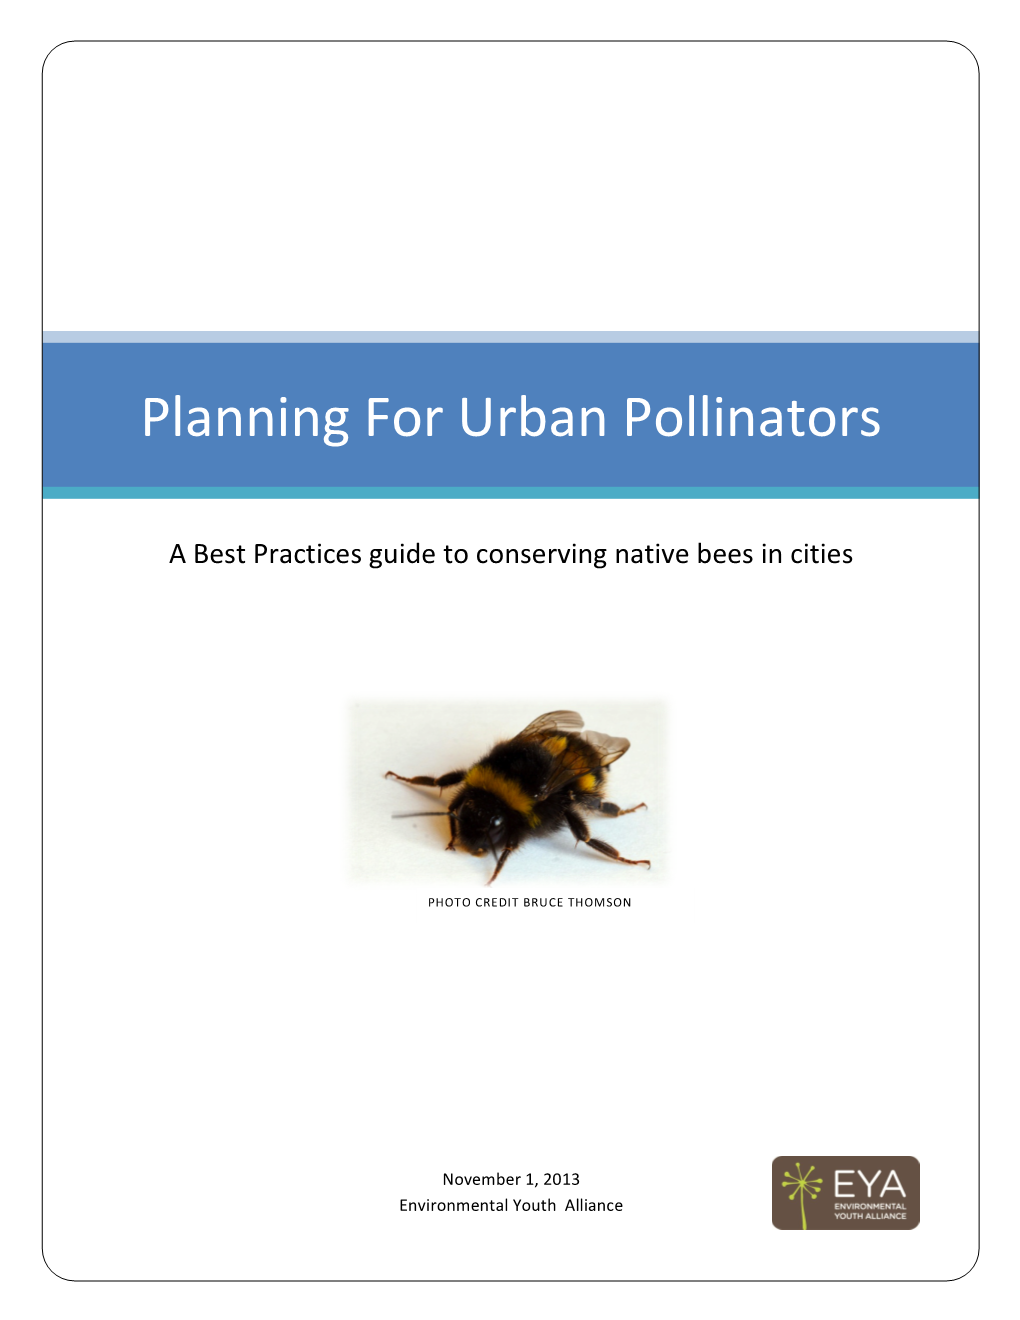 Planning for Urban Pollinators